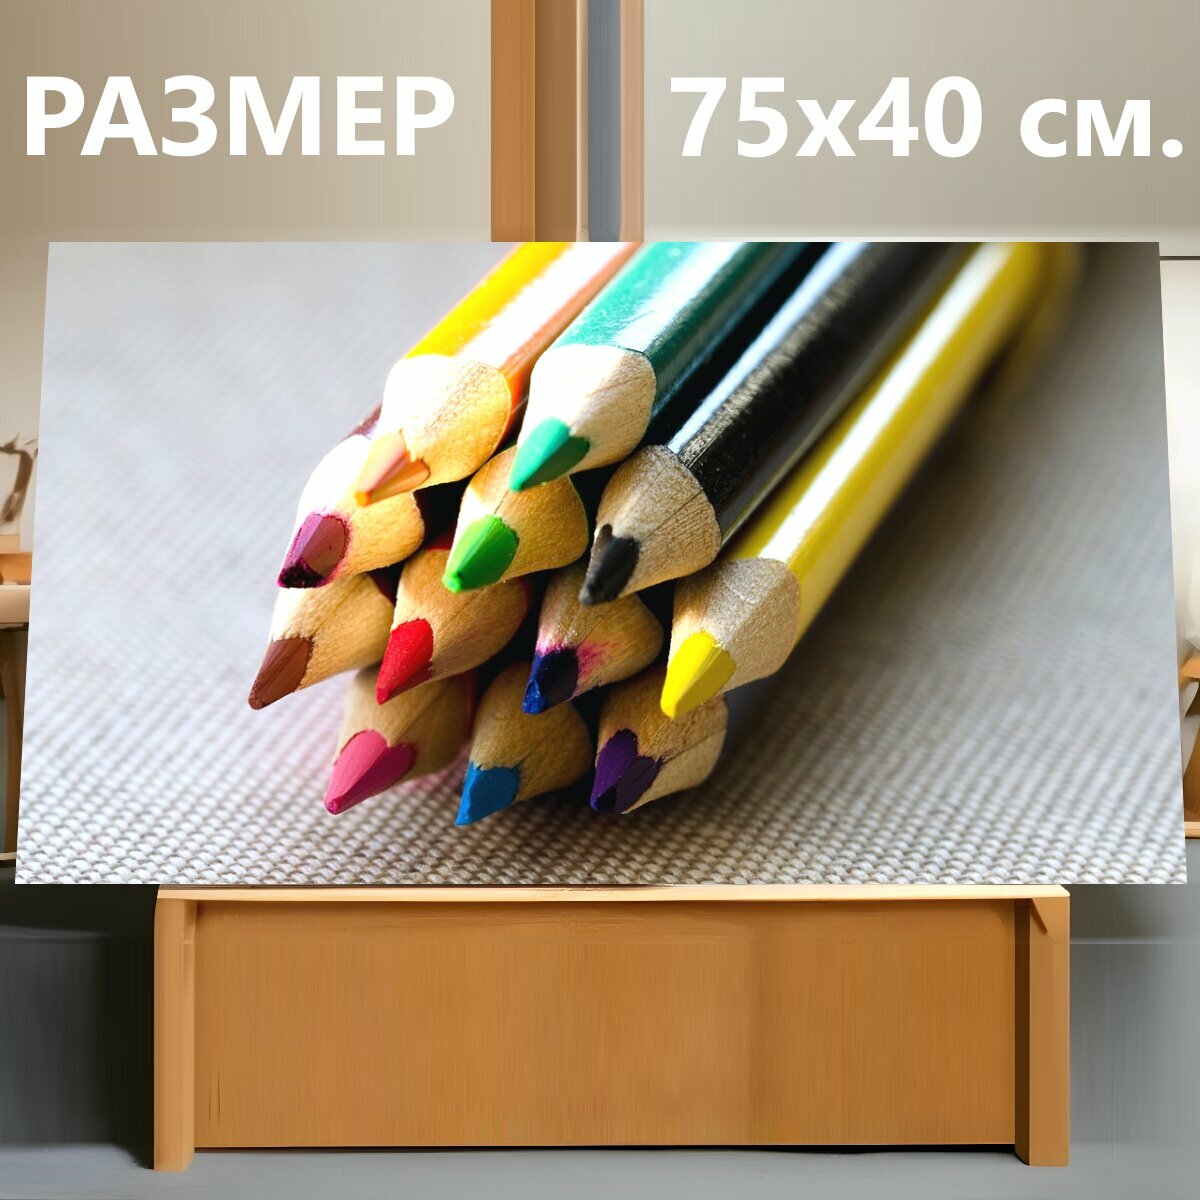 Картина на холсте "Карандаши, цвета, карандаш" на подрамнике 75х40 см. для интерьера